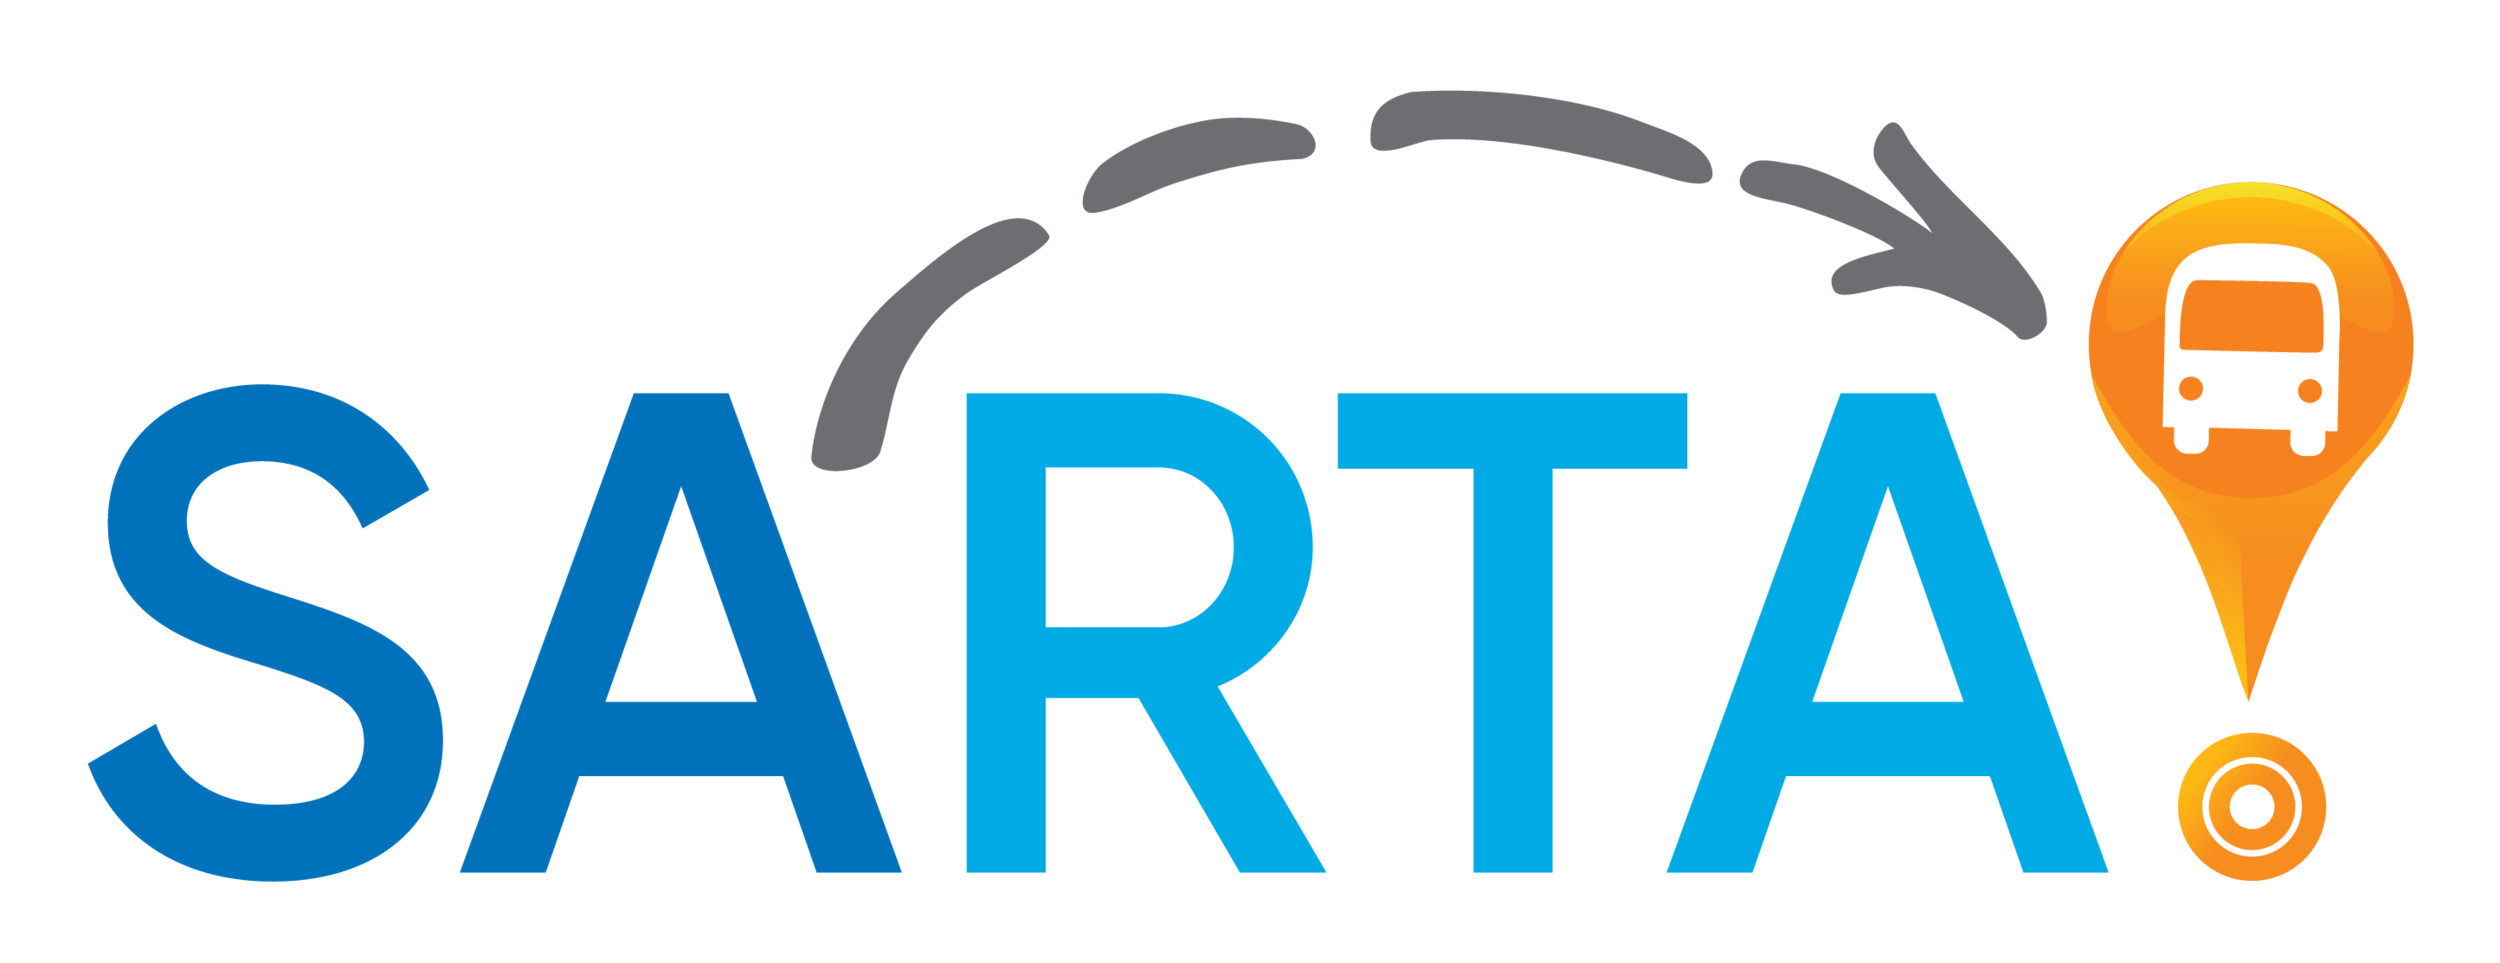 SARTA Logo.png